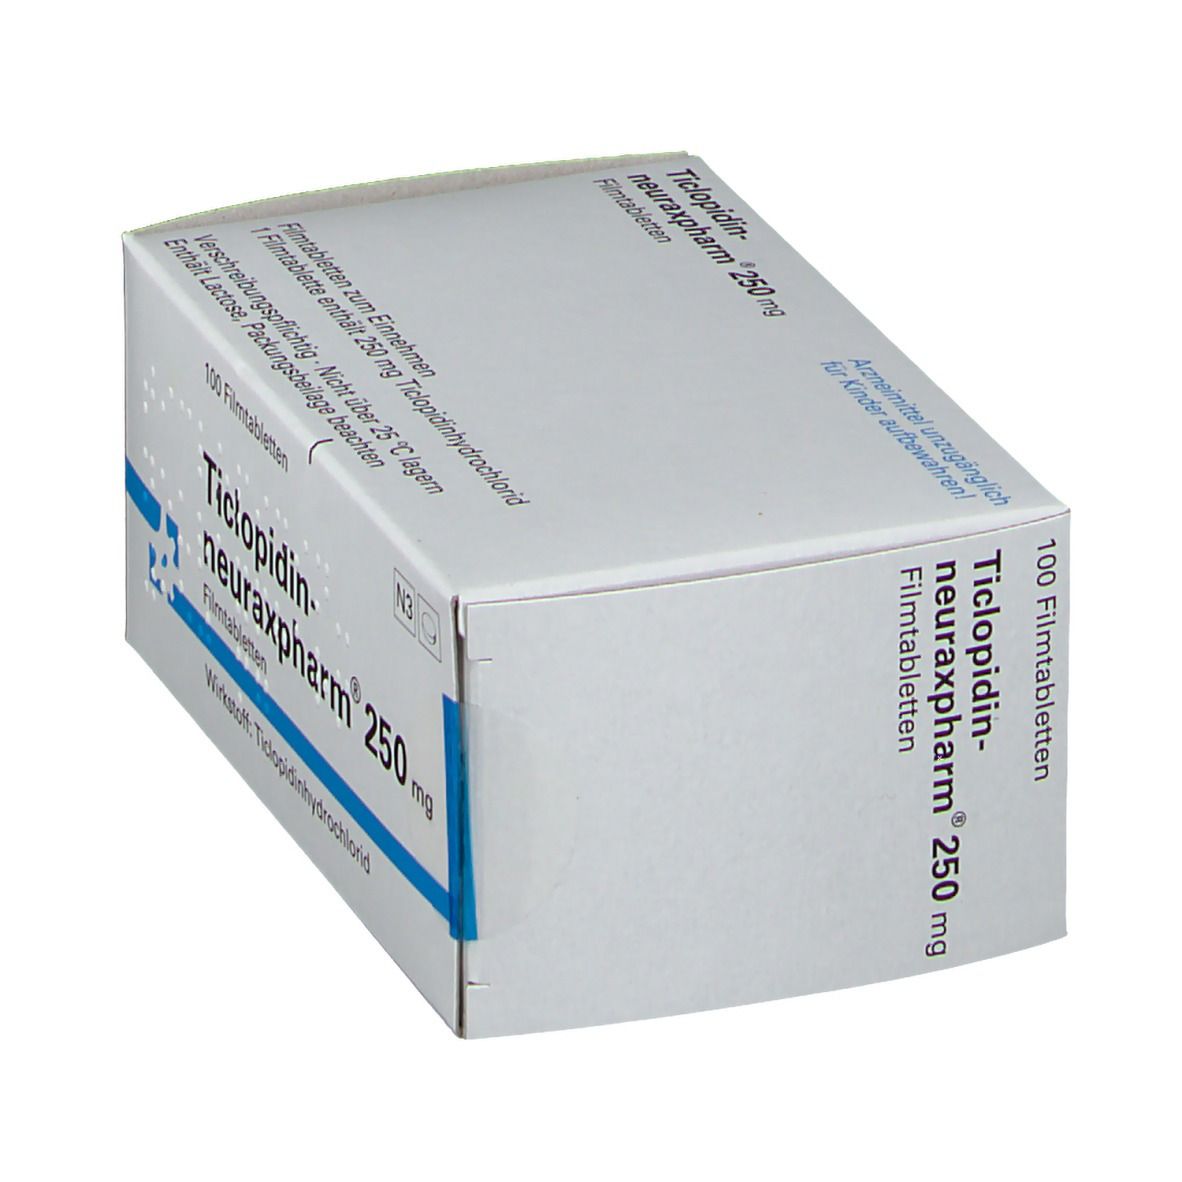 Ticlopidin-neuraxpharm® 250 mg